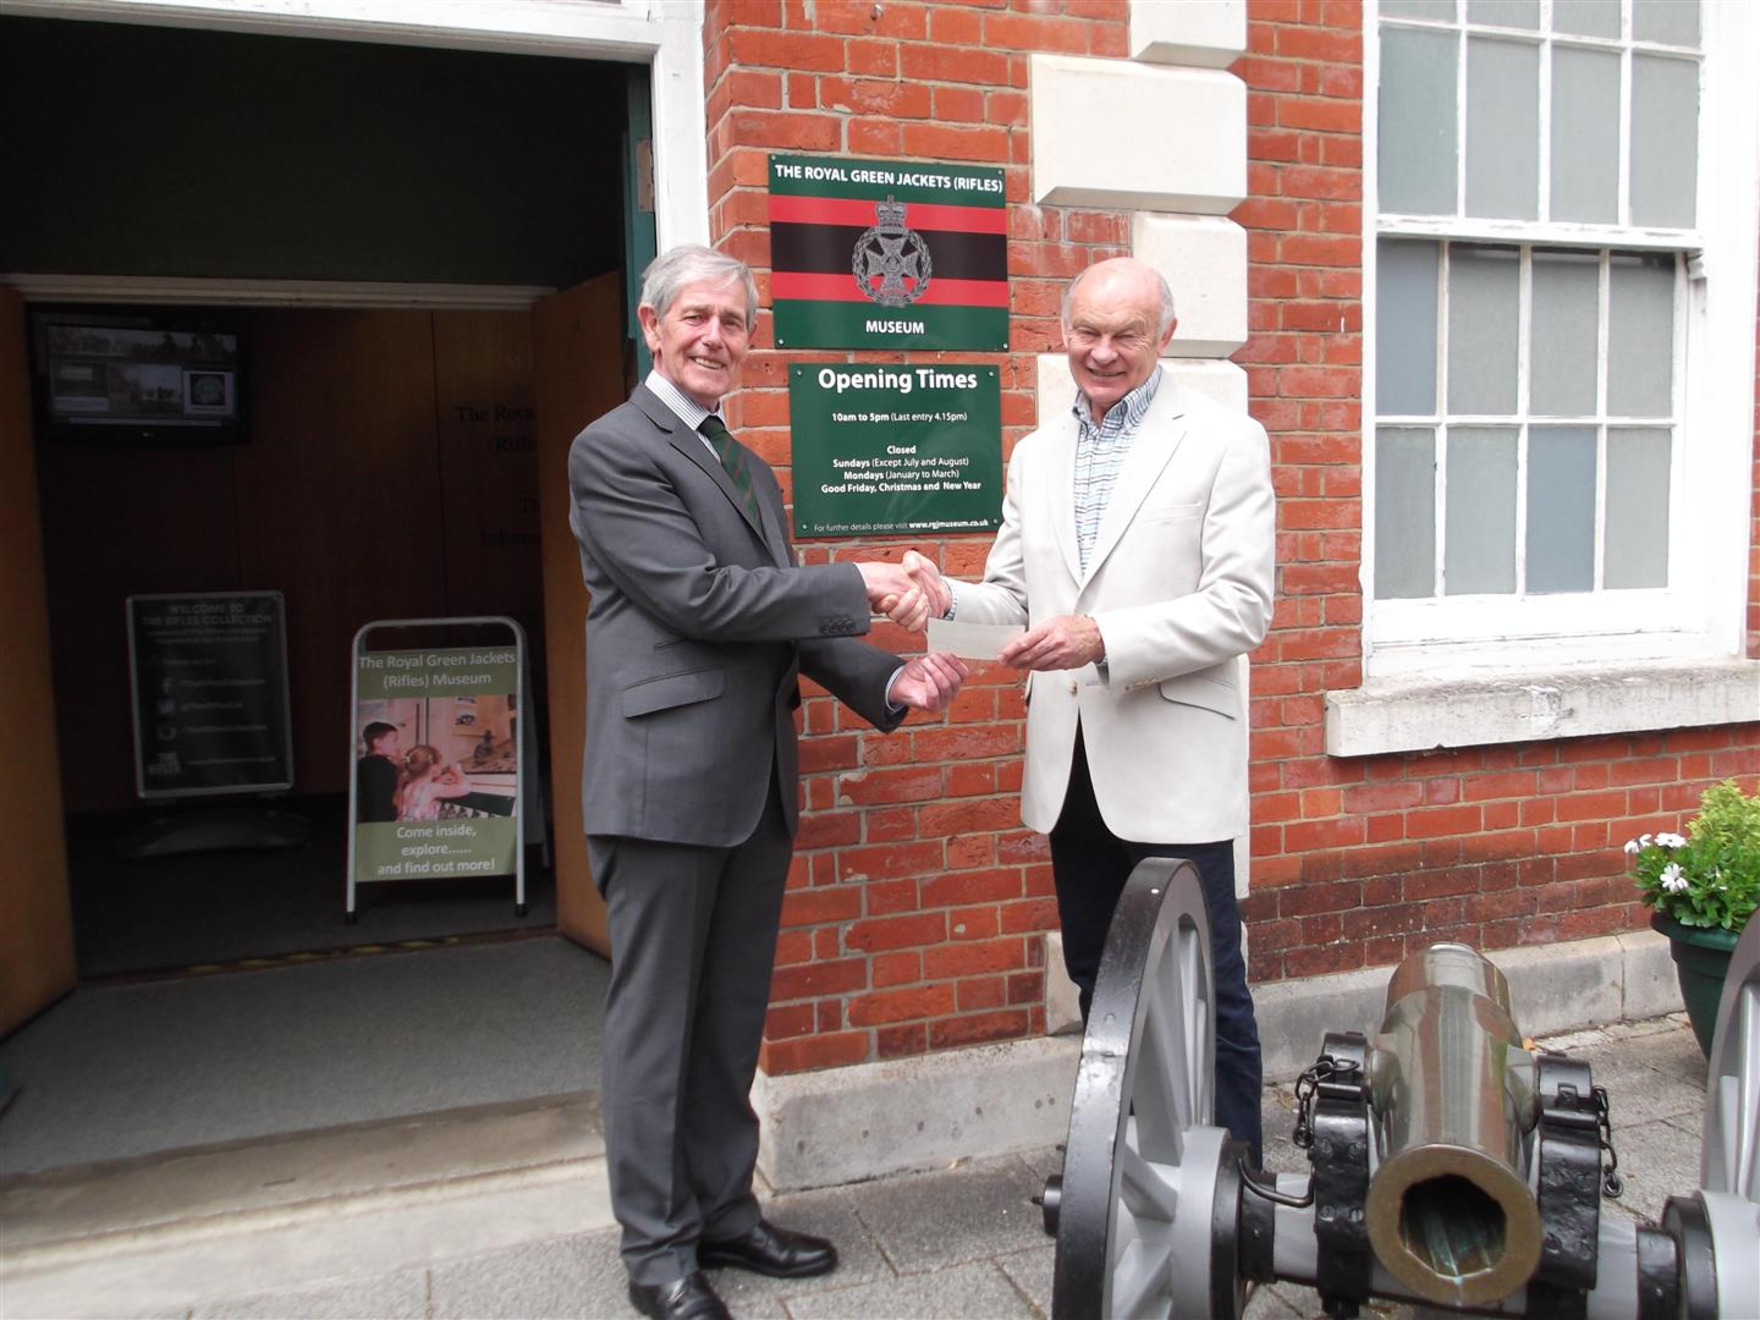 Lodge donates £400 to Royal Green Jackets (Rifles) Museum